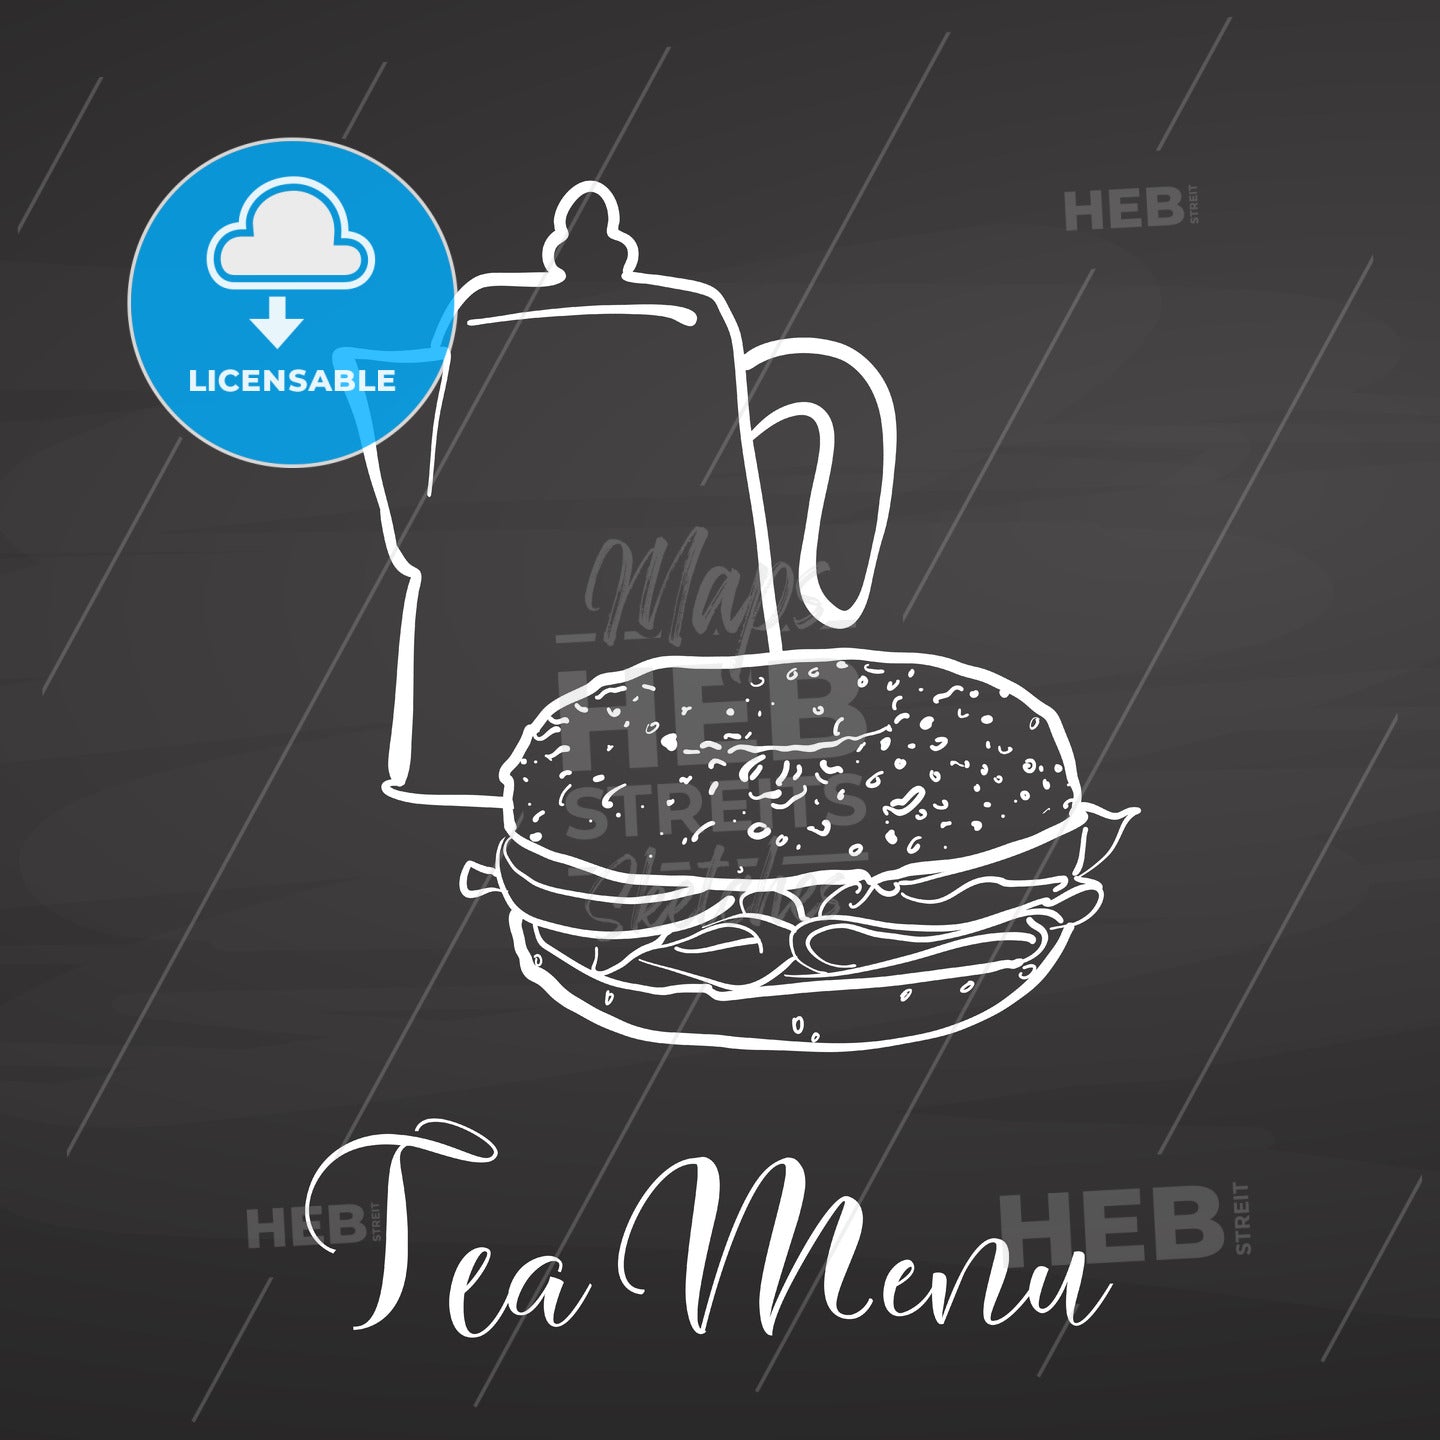 Tea menu with bagel on chalkboard – instant download